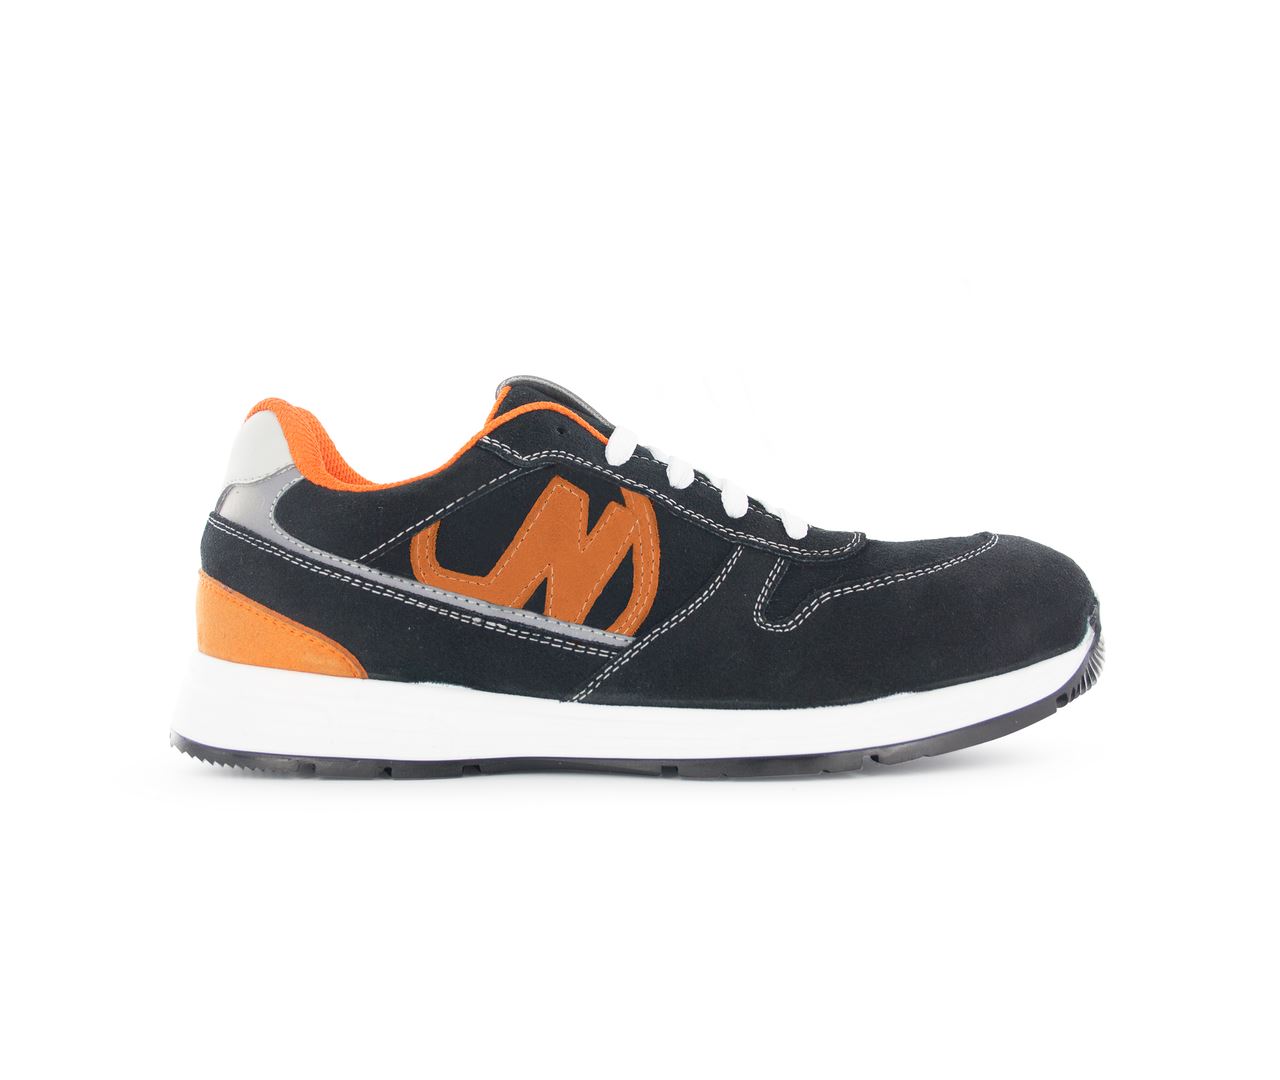 Chaussure de sécurité noir/orange Run Soft T.43 - Nord'Ways - RUN000343000NOOR